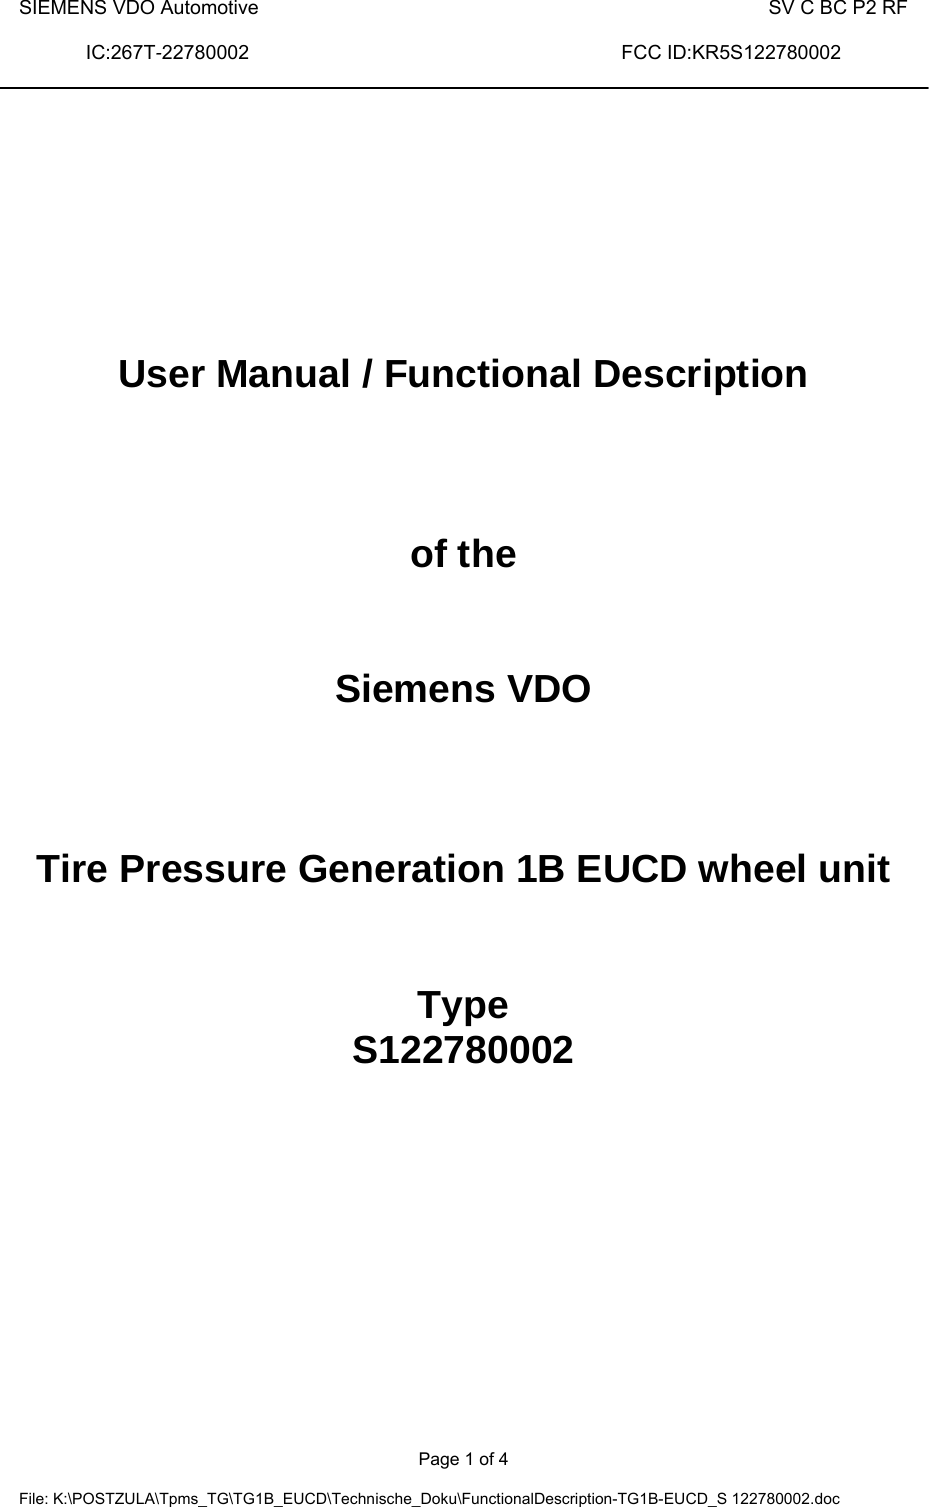 SIEMENS VDO Automotive   SV C BC P2 RF  IC:267T-22780002                               FCC ID:KR5S122780002    Page 1 of 4  File: K:\POSTZULA\Tpms_TG\TG1B_EUCD\Technische_Doku\FunctionalDescription-TG1B-EUCD_S 122780002.doc       User Manual / Functional Description    of the   Siemens VDO    Tire Pressure Generation 1B EUCD wheel unit   Type  S122780002            